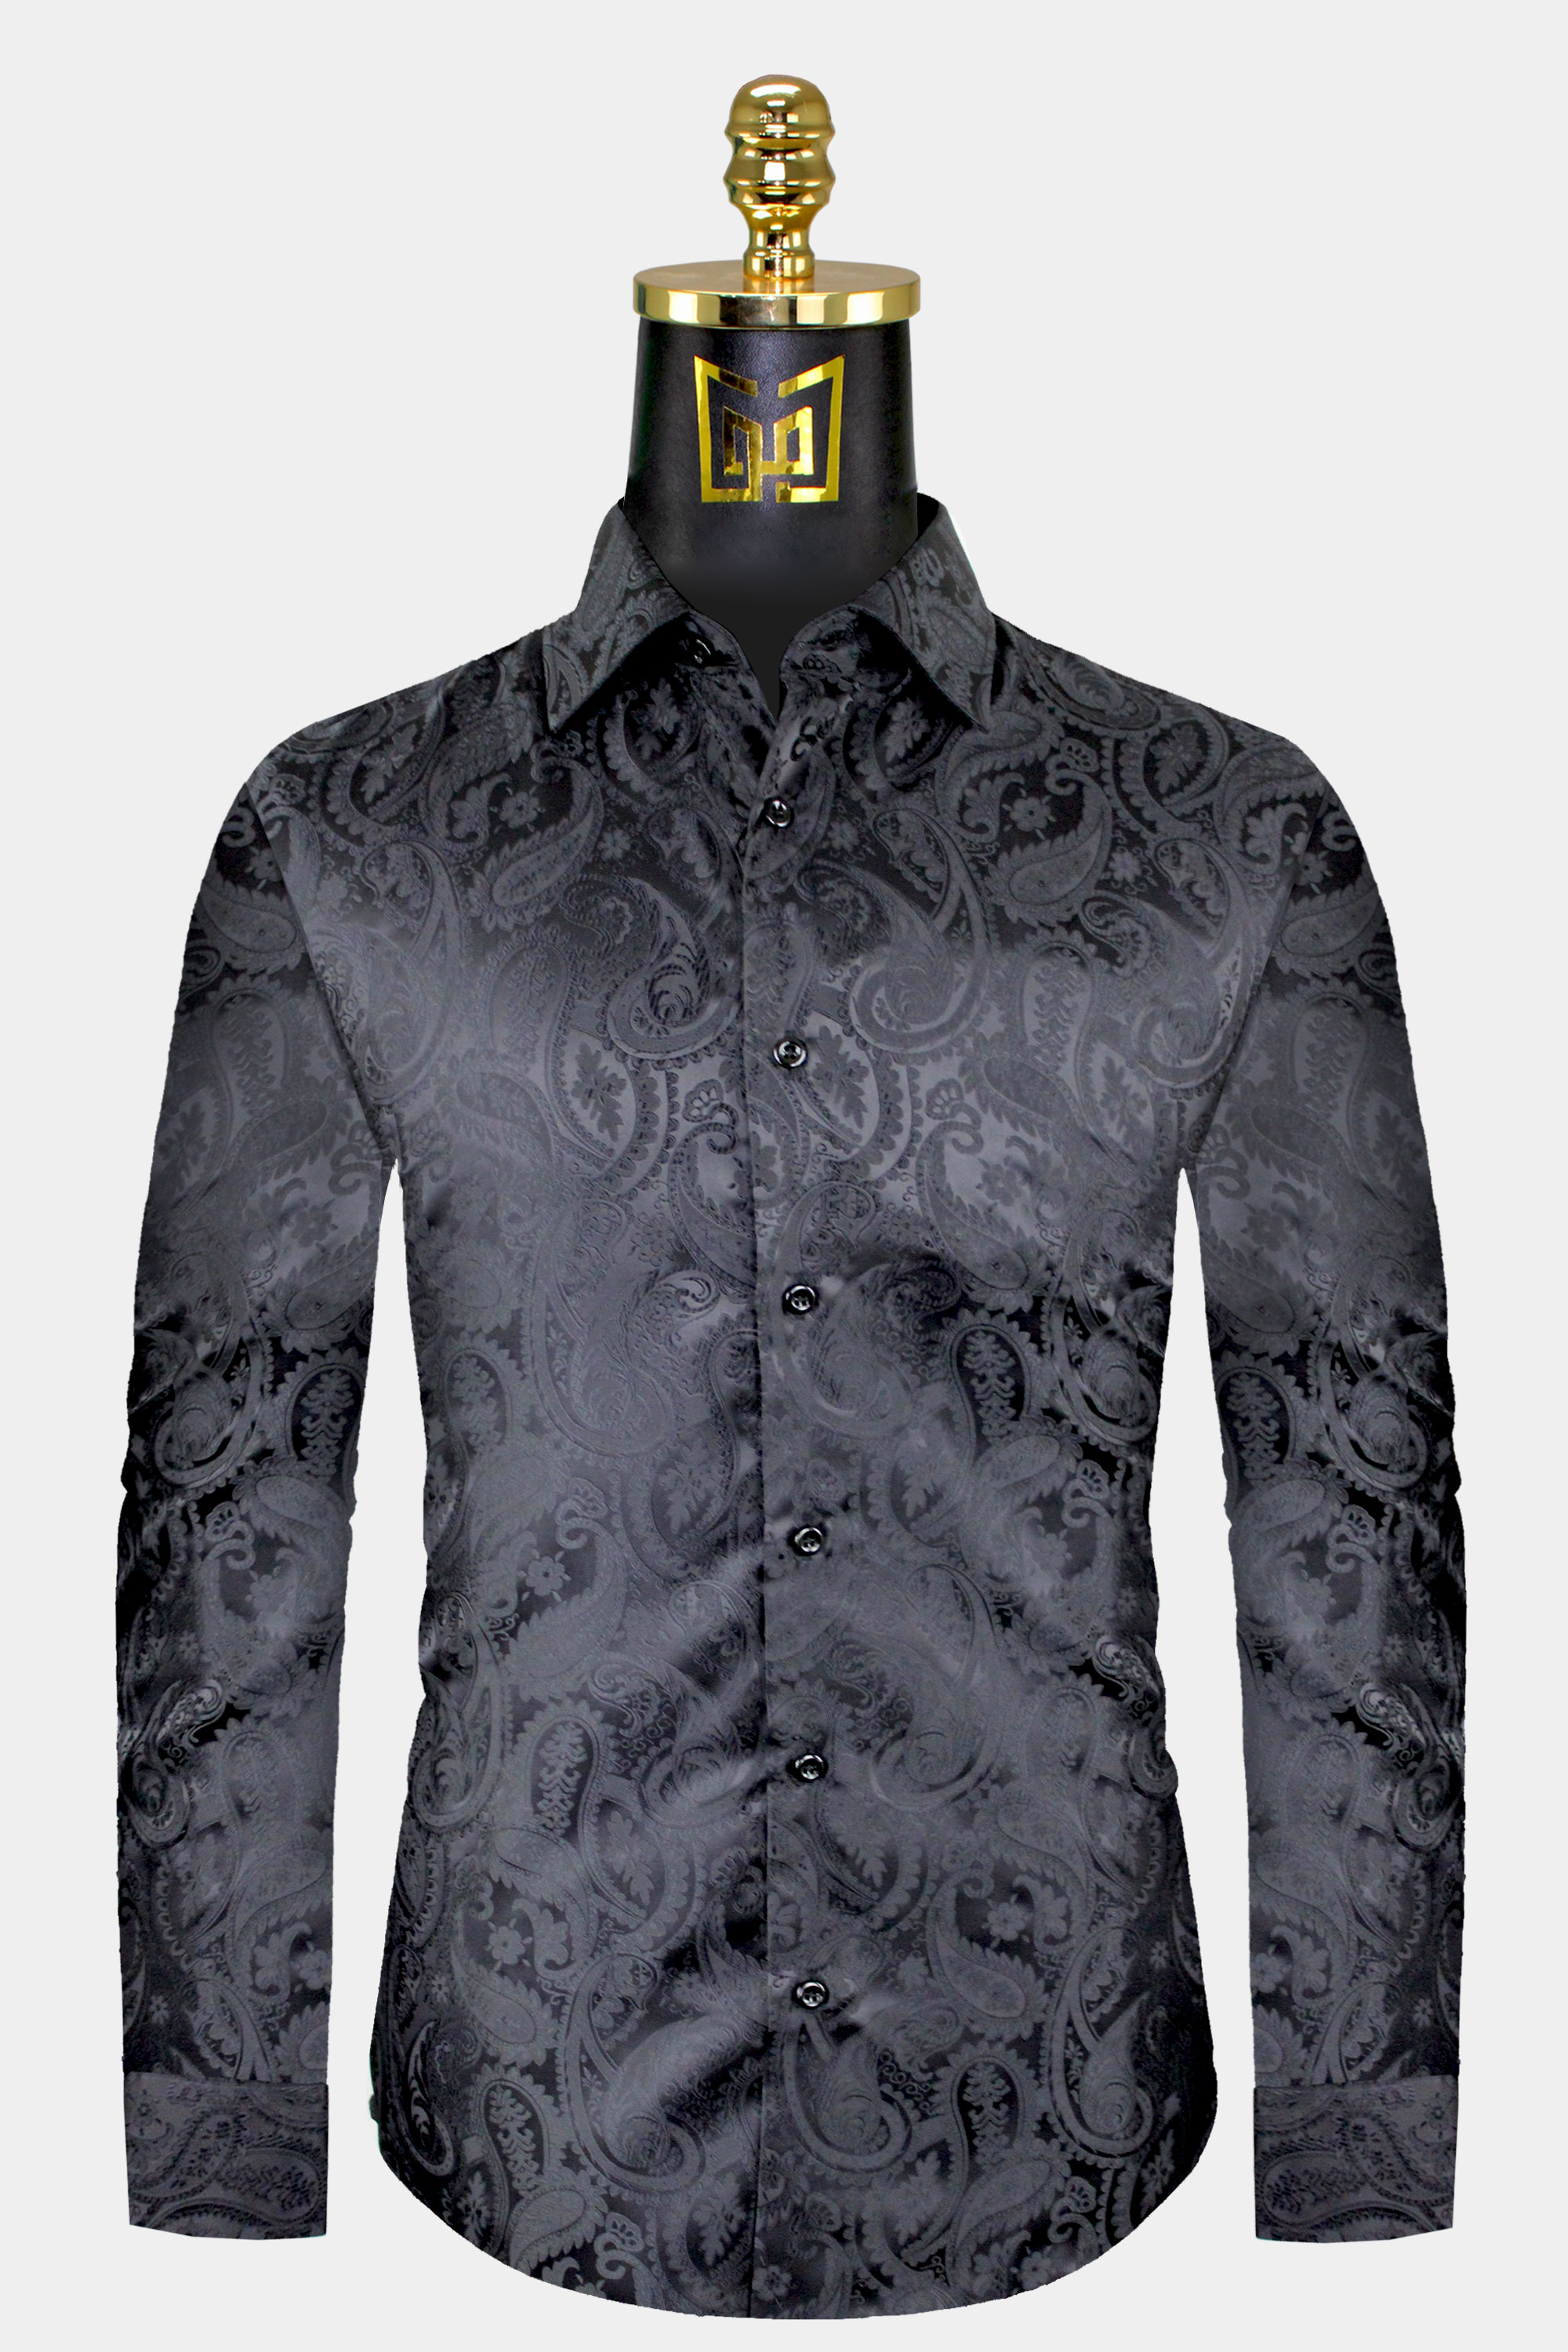 Mens-Black-Paisley-Shirt-Dress-shirt-For-Men-Floral-from-Gentlemansguru.com